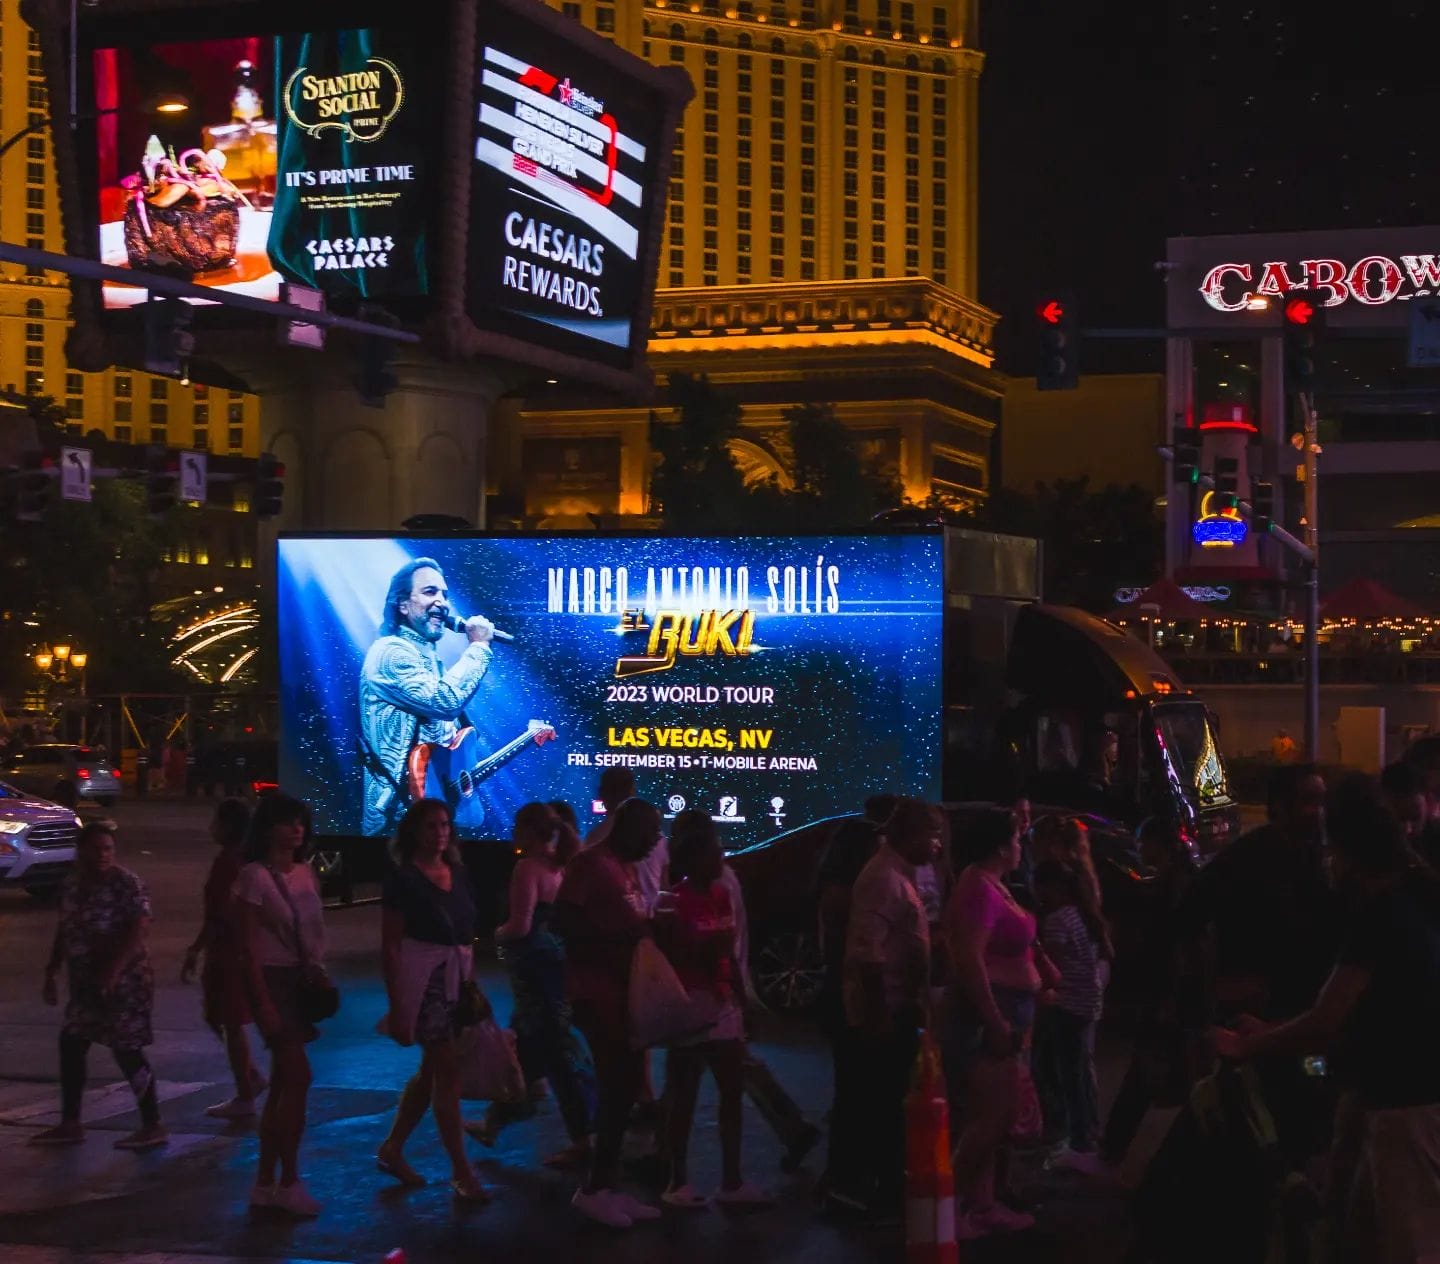 Las Vegas street with concert advertisement billboard at night.